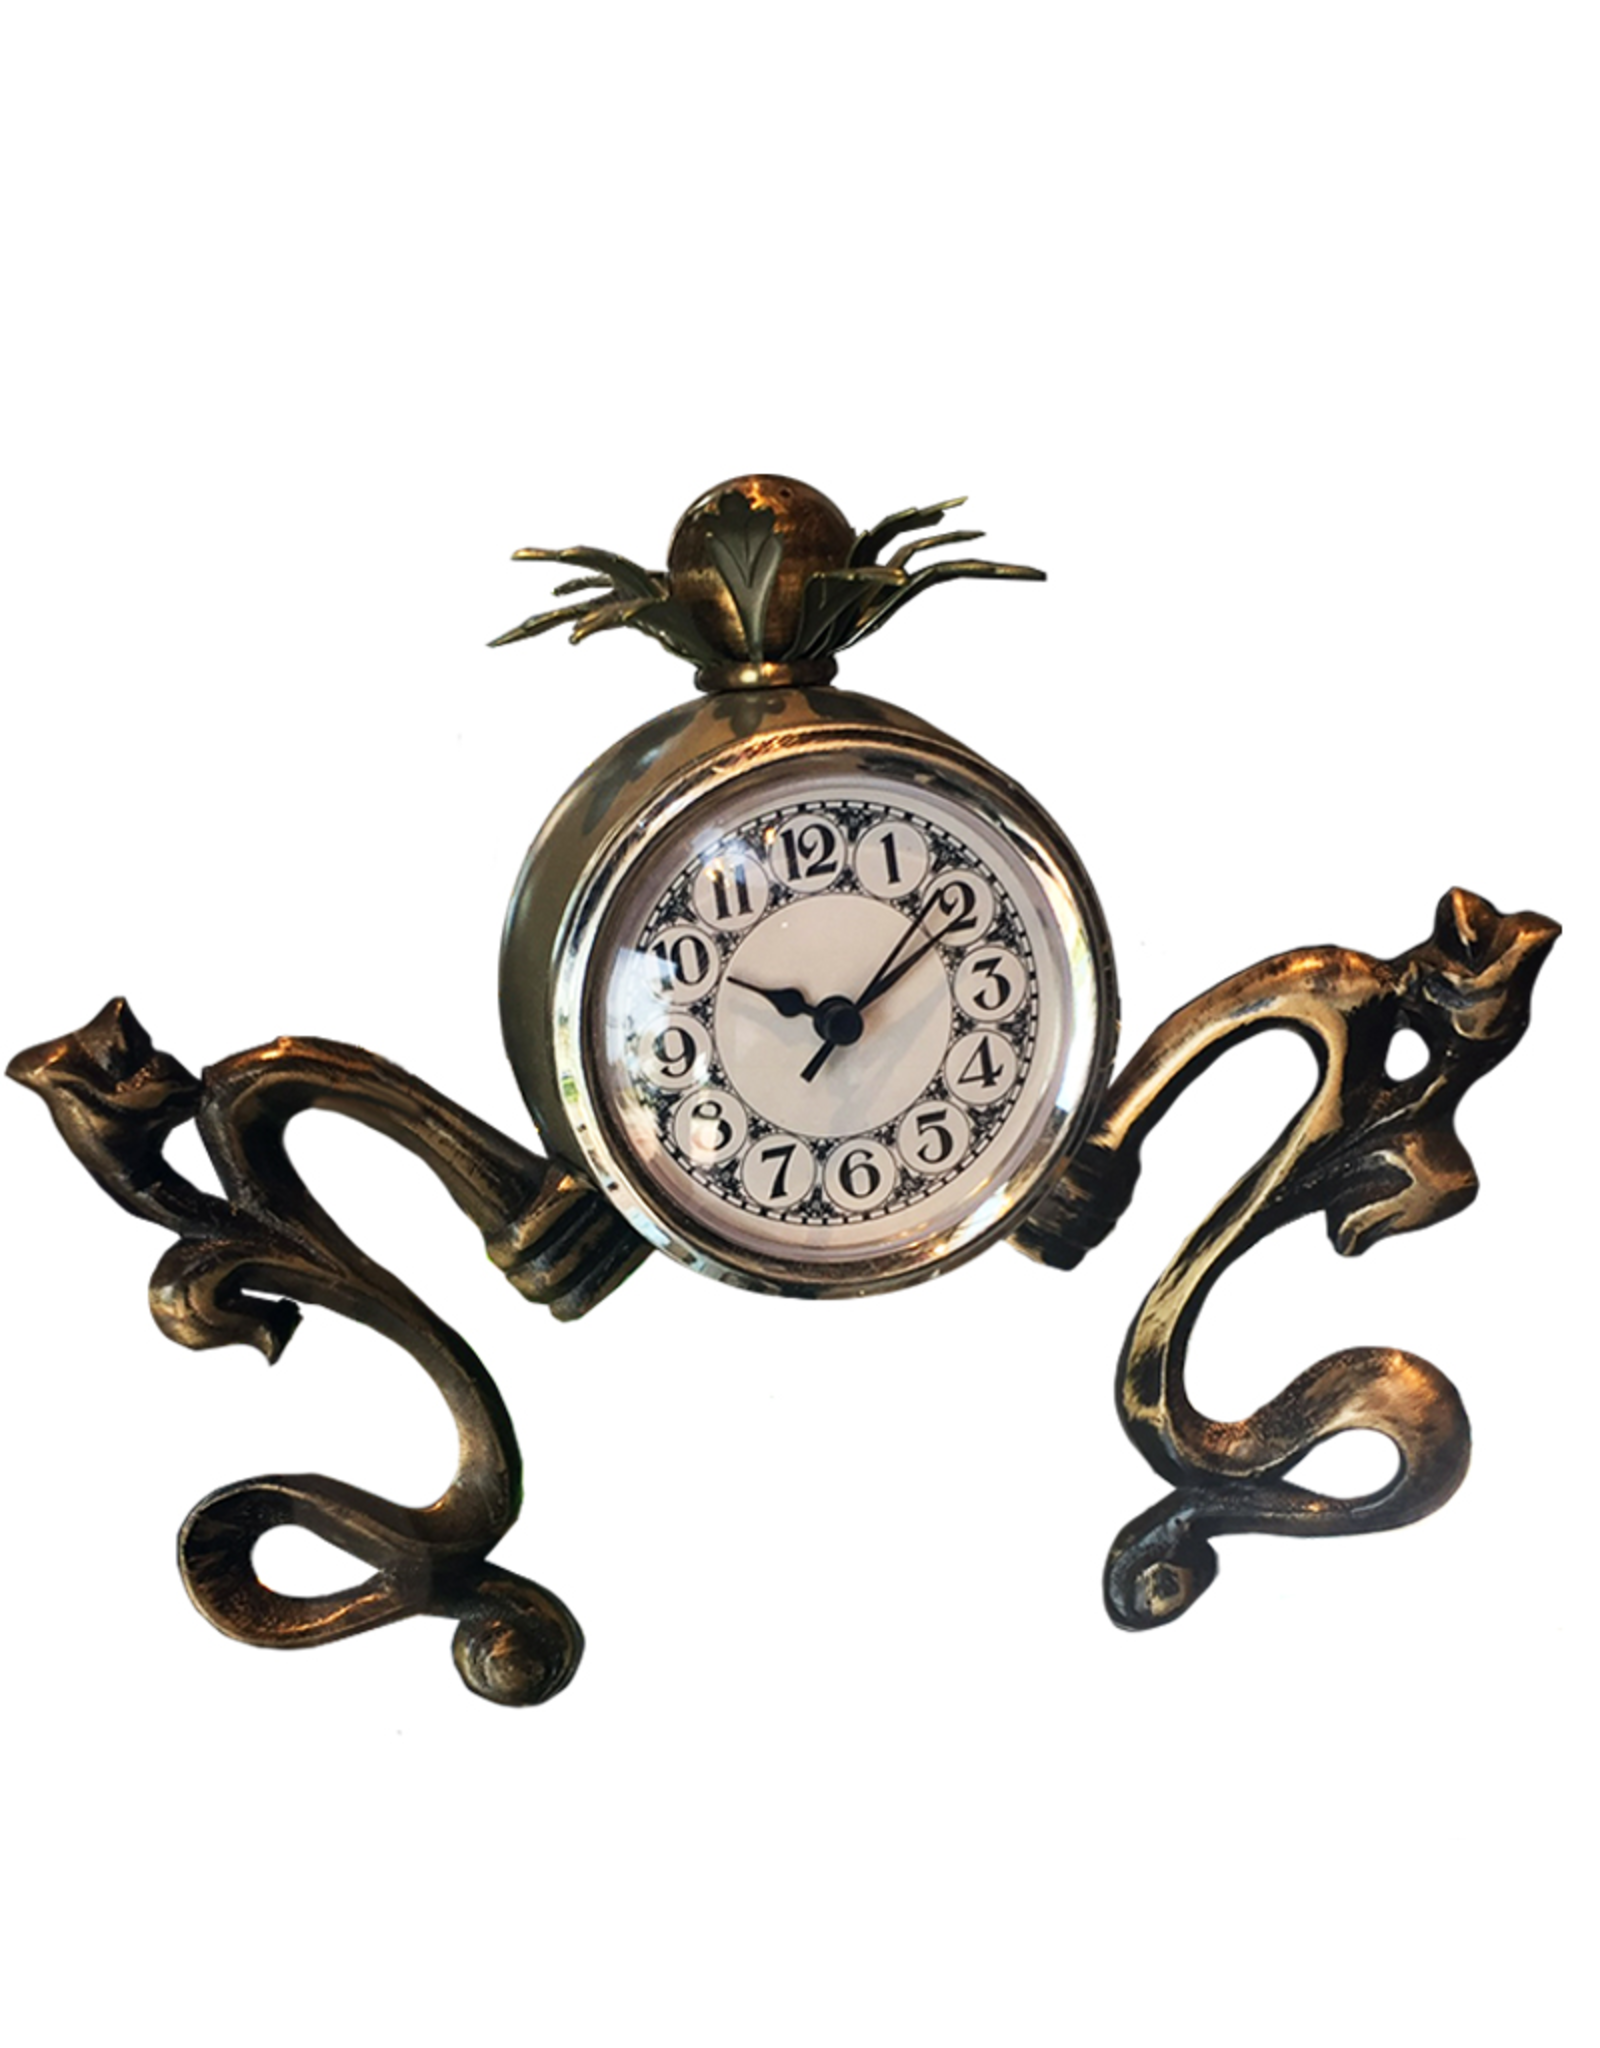 Luna Bella Designs Parker Table Clock Handmade Modern Eclectic Chic